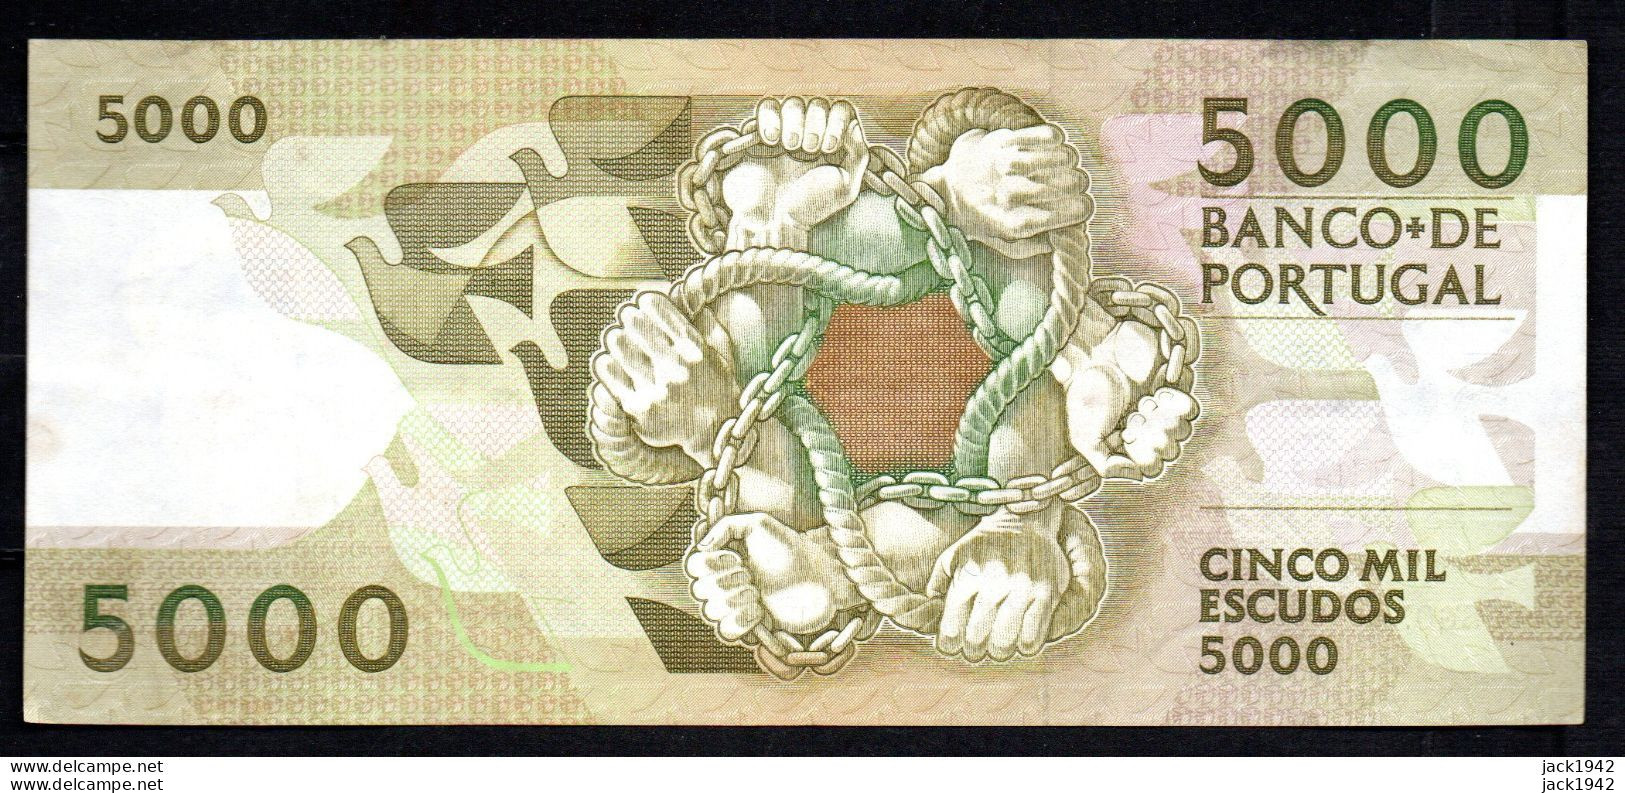 5000 Escudos Note - Billet De 5000 Escudos Octobre 1991 - TTB Very Fine Condition - Portugal